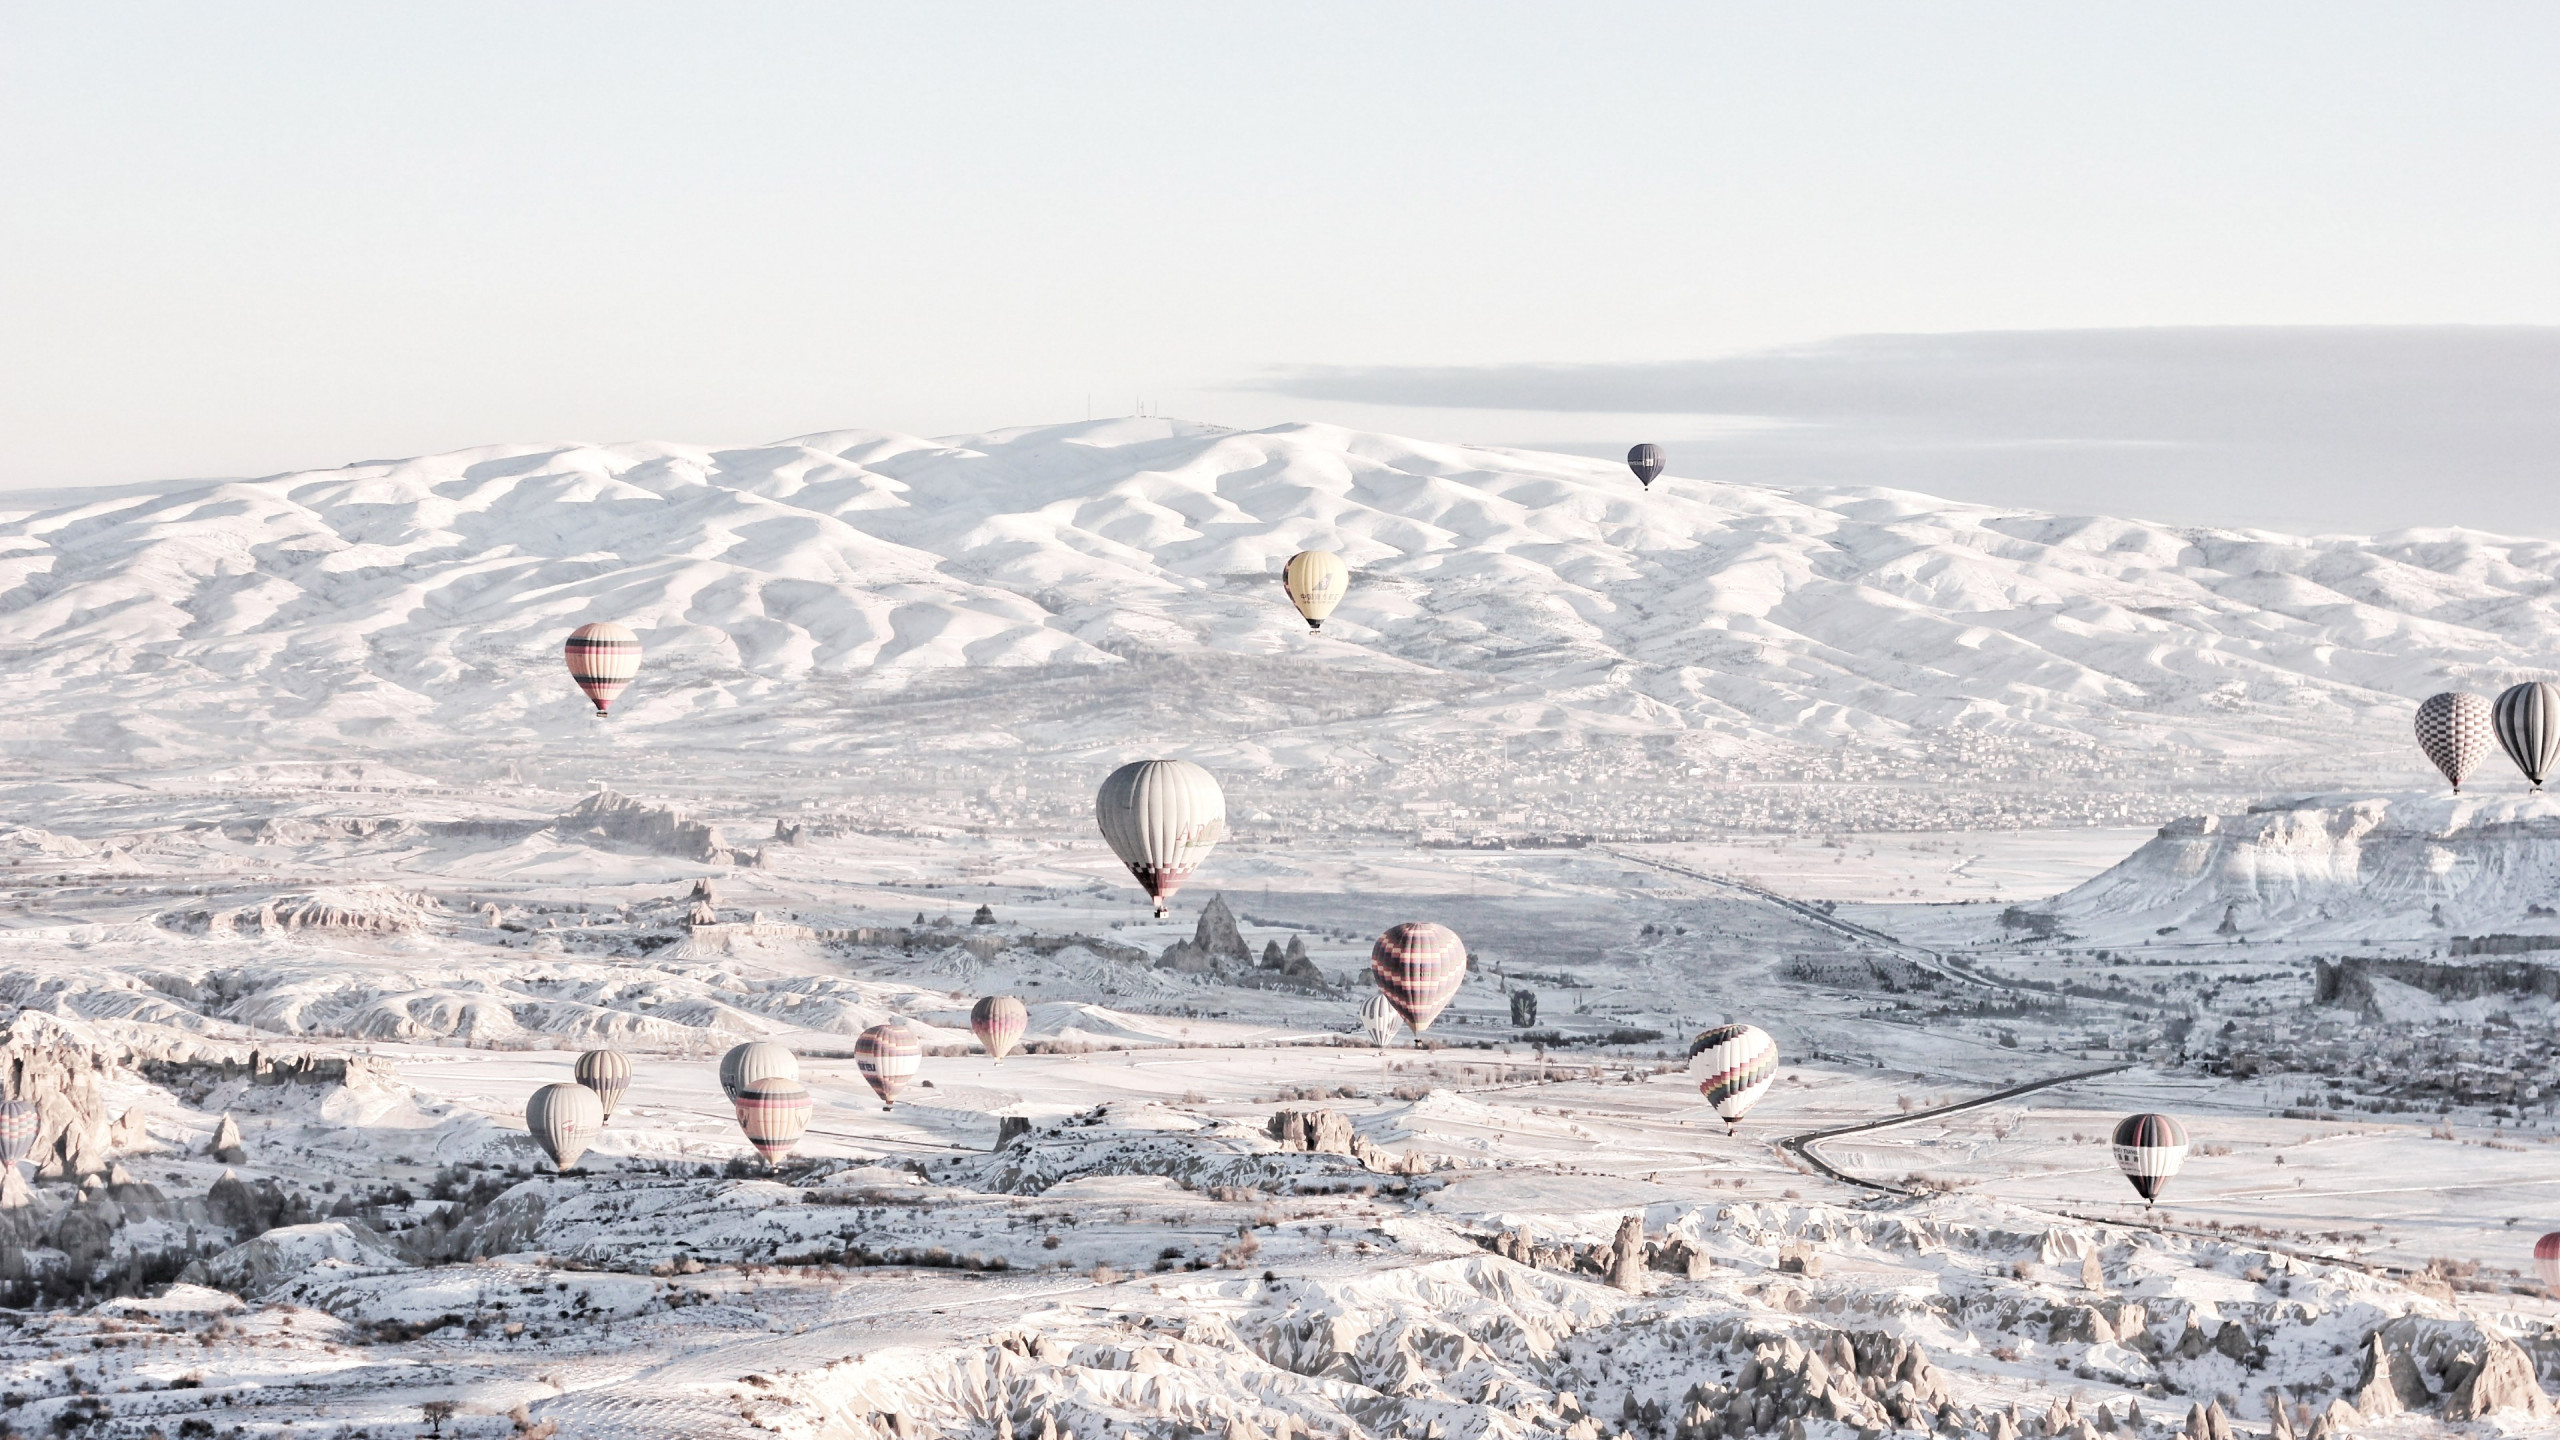 Hot air balloons in Winter landscape wallpaper 2560x1440